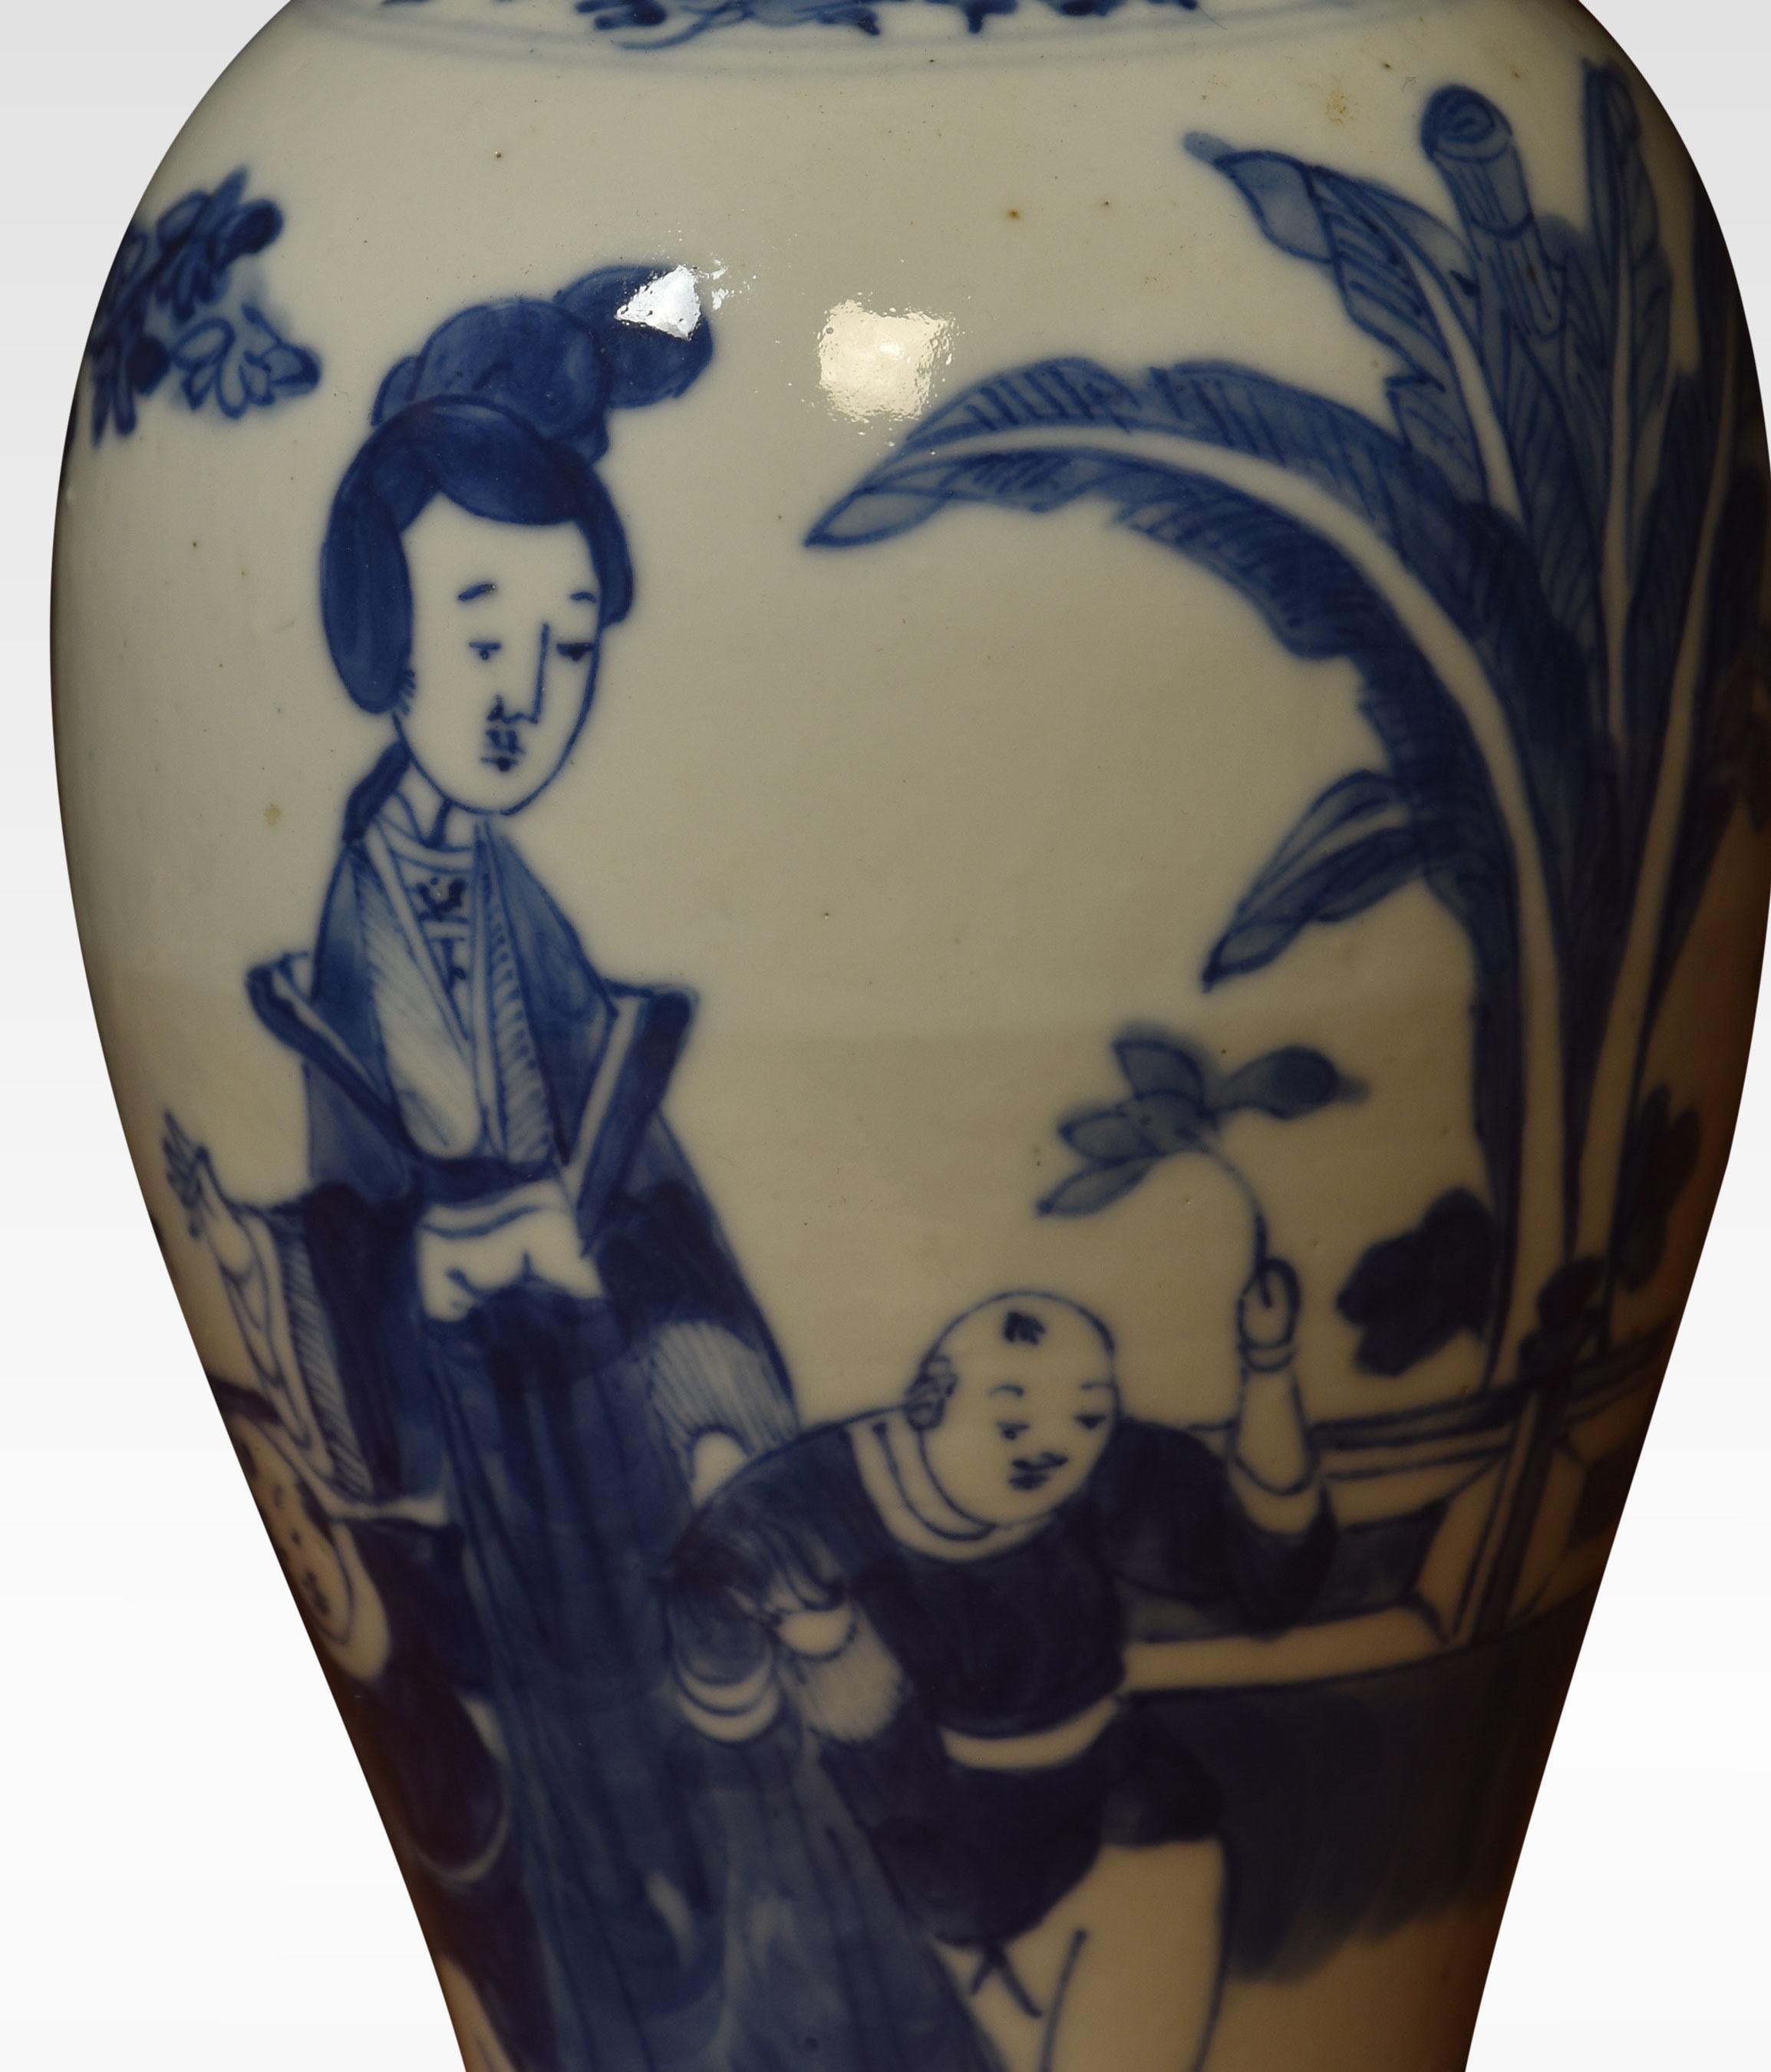 antique blue and white vases